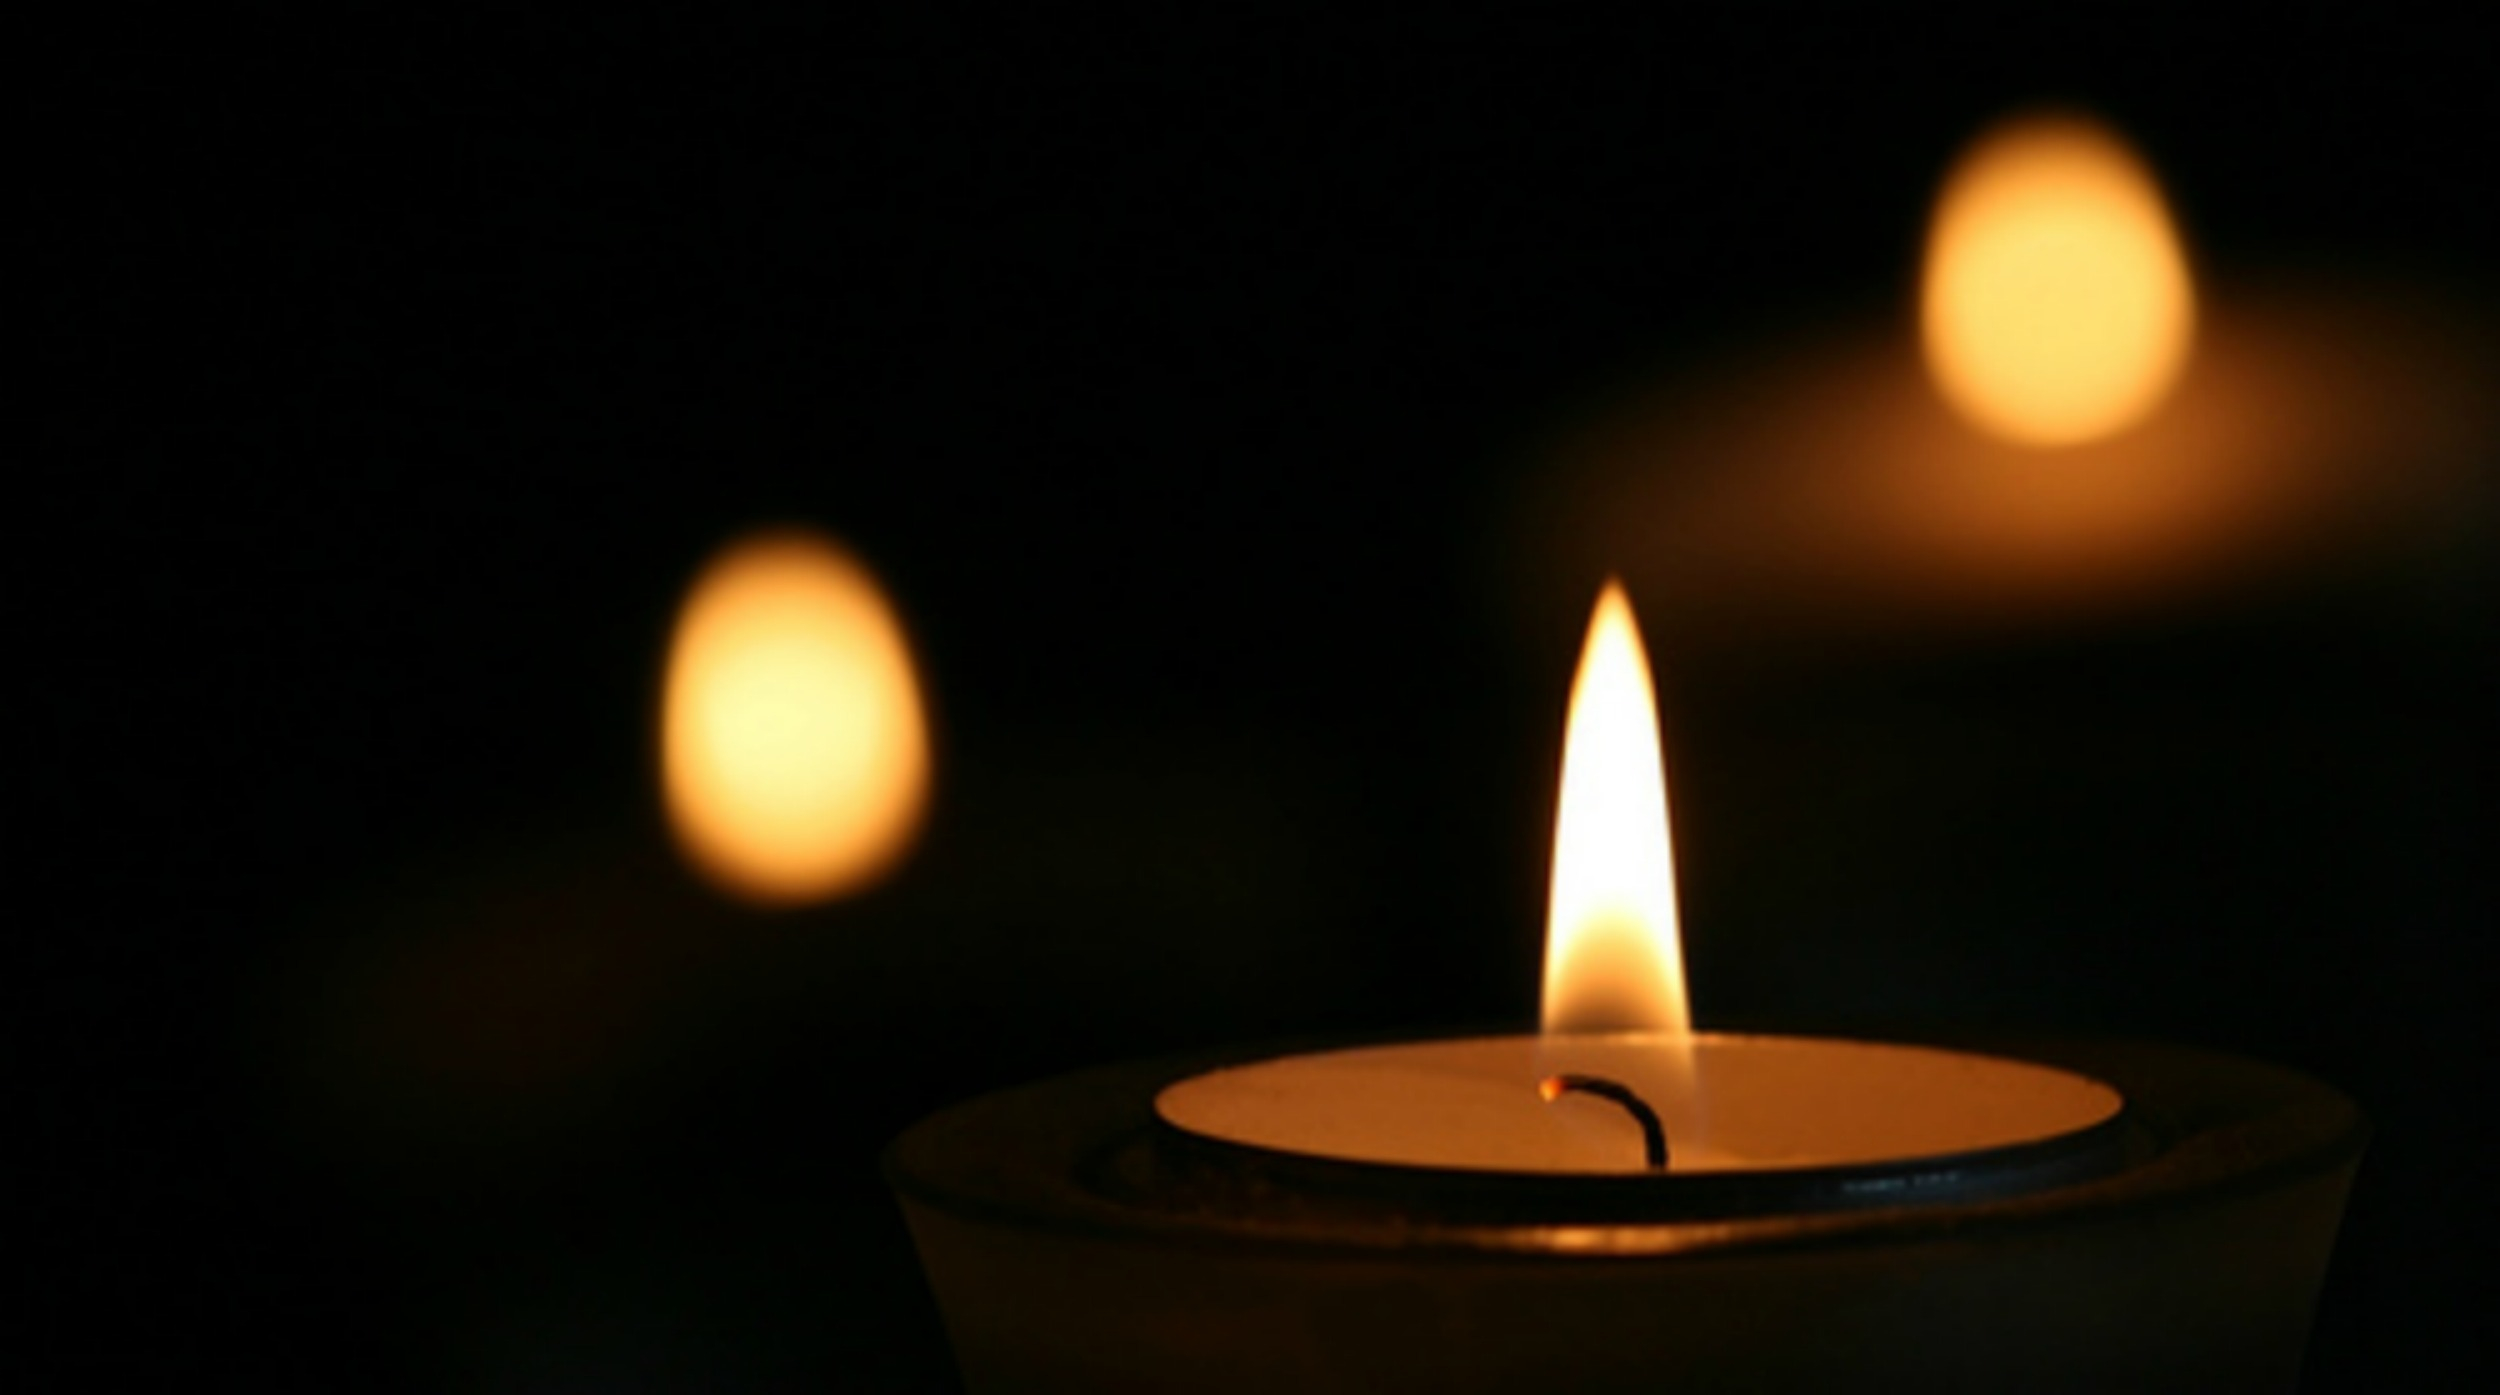 Скорбим фото со свечой 22.03. Траурная свеча. Свеча памяти. Поминальная свеча. Свеча скорби.